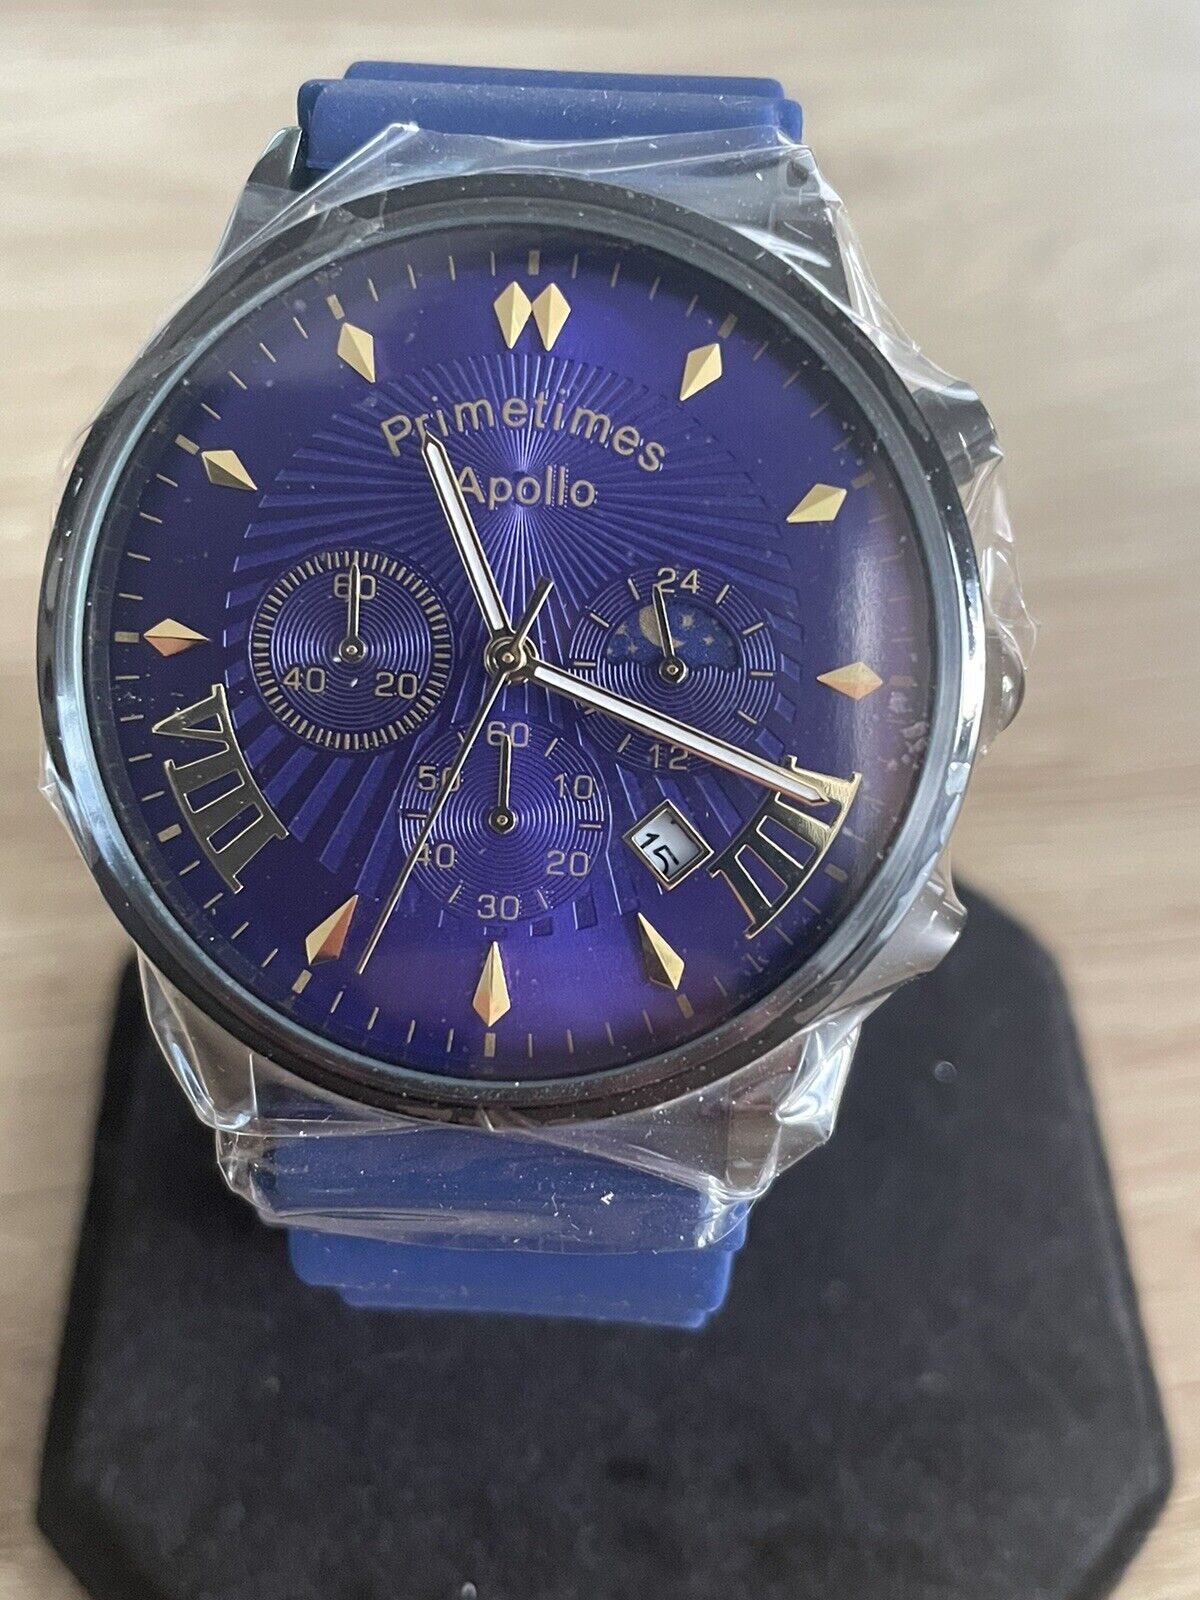 New Primetimes APOLLO Quartz watch #PT1994 - Westies Watches